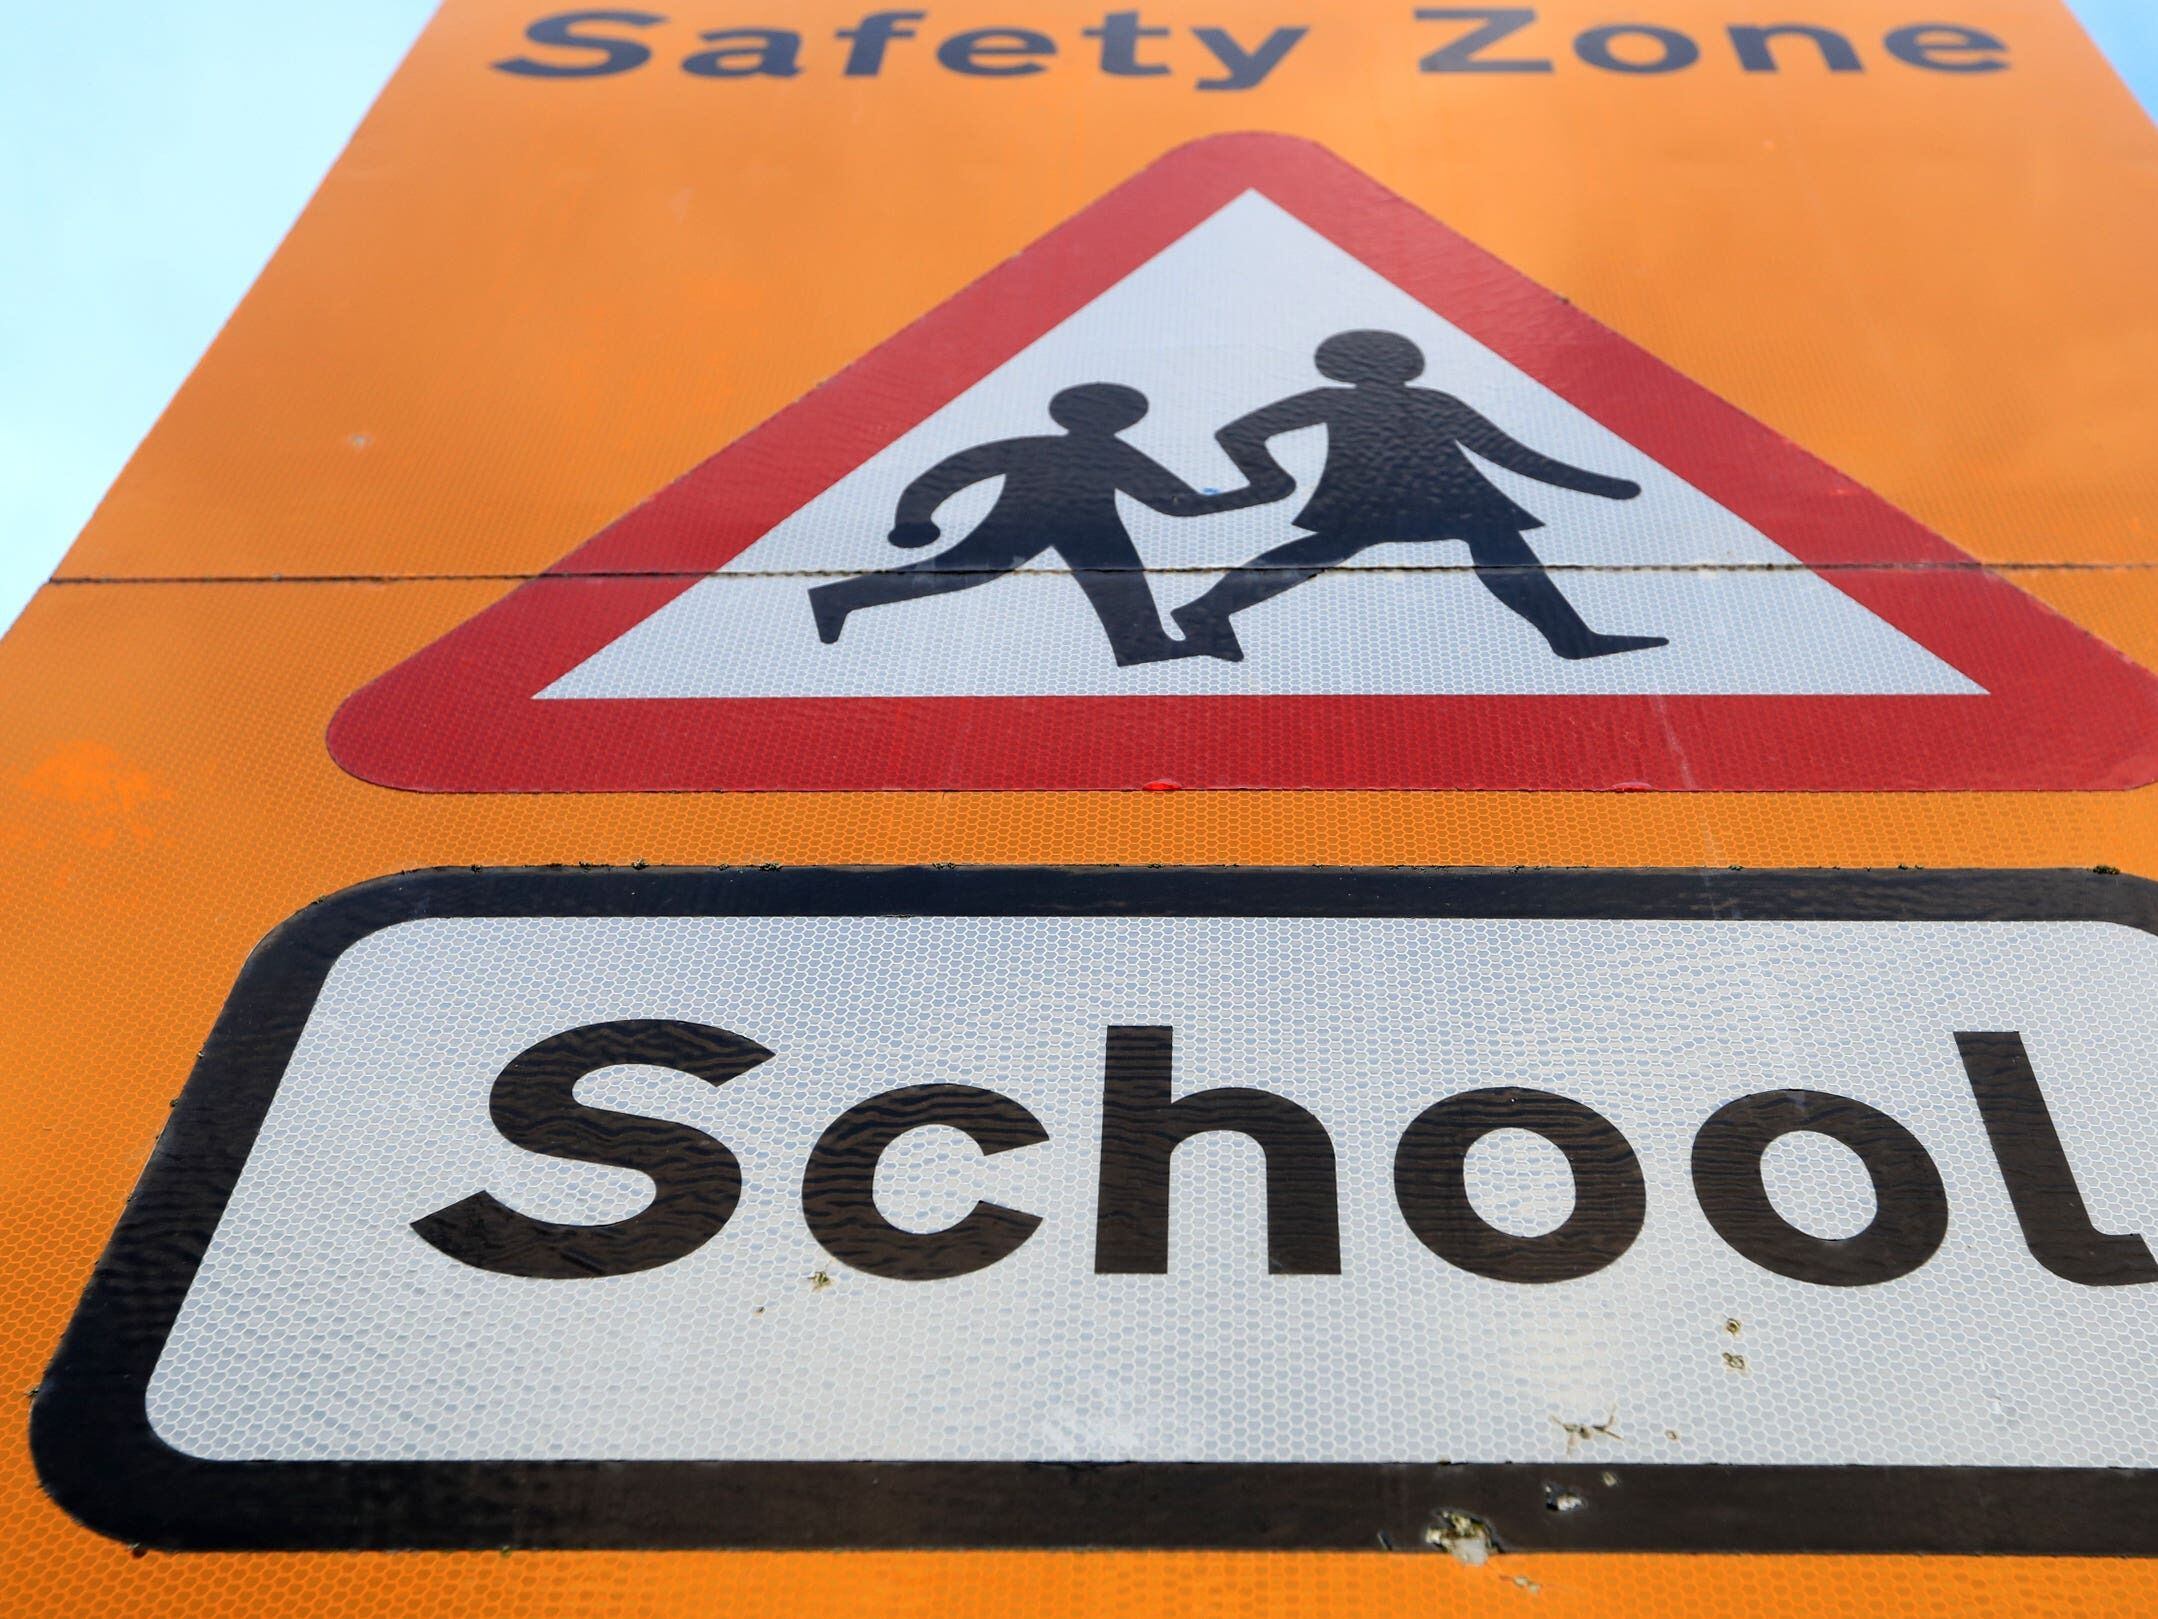 Belfast primary school classrooms deemed unsafe after Raac identified